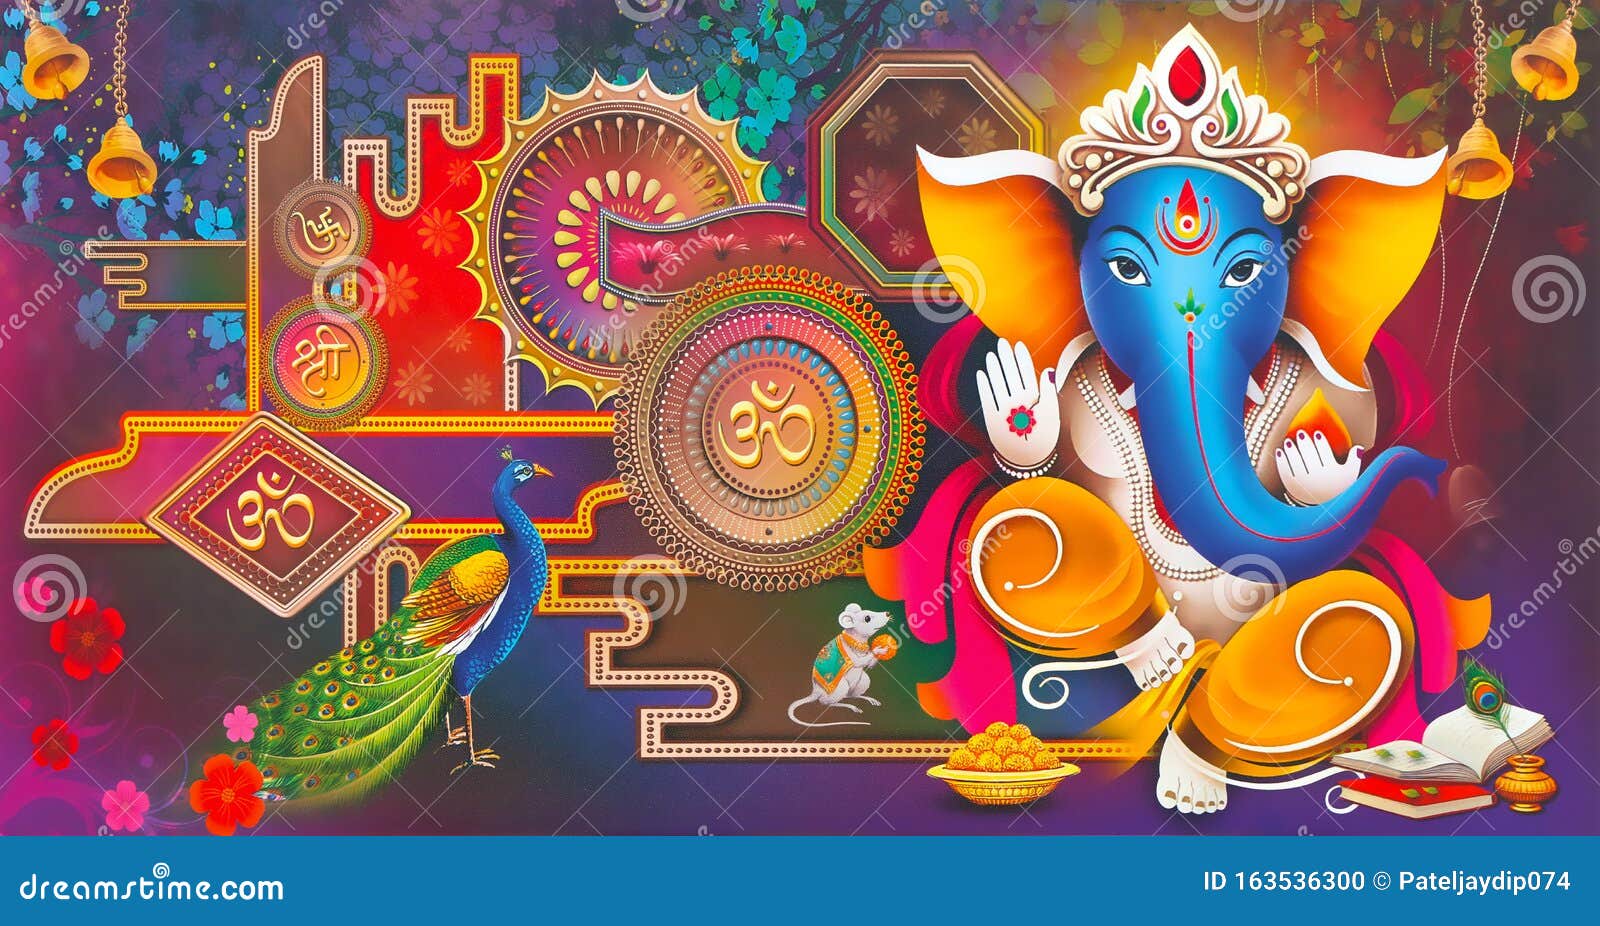 282675 Hindu God Images Stock Photos  Vectors  Shutterstock